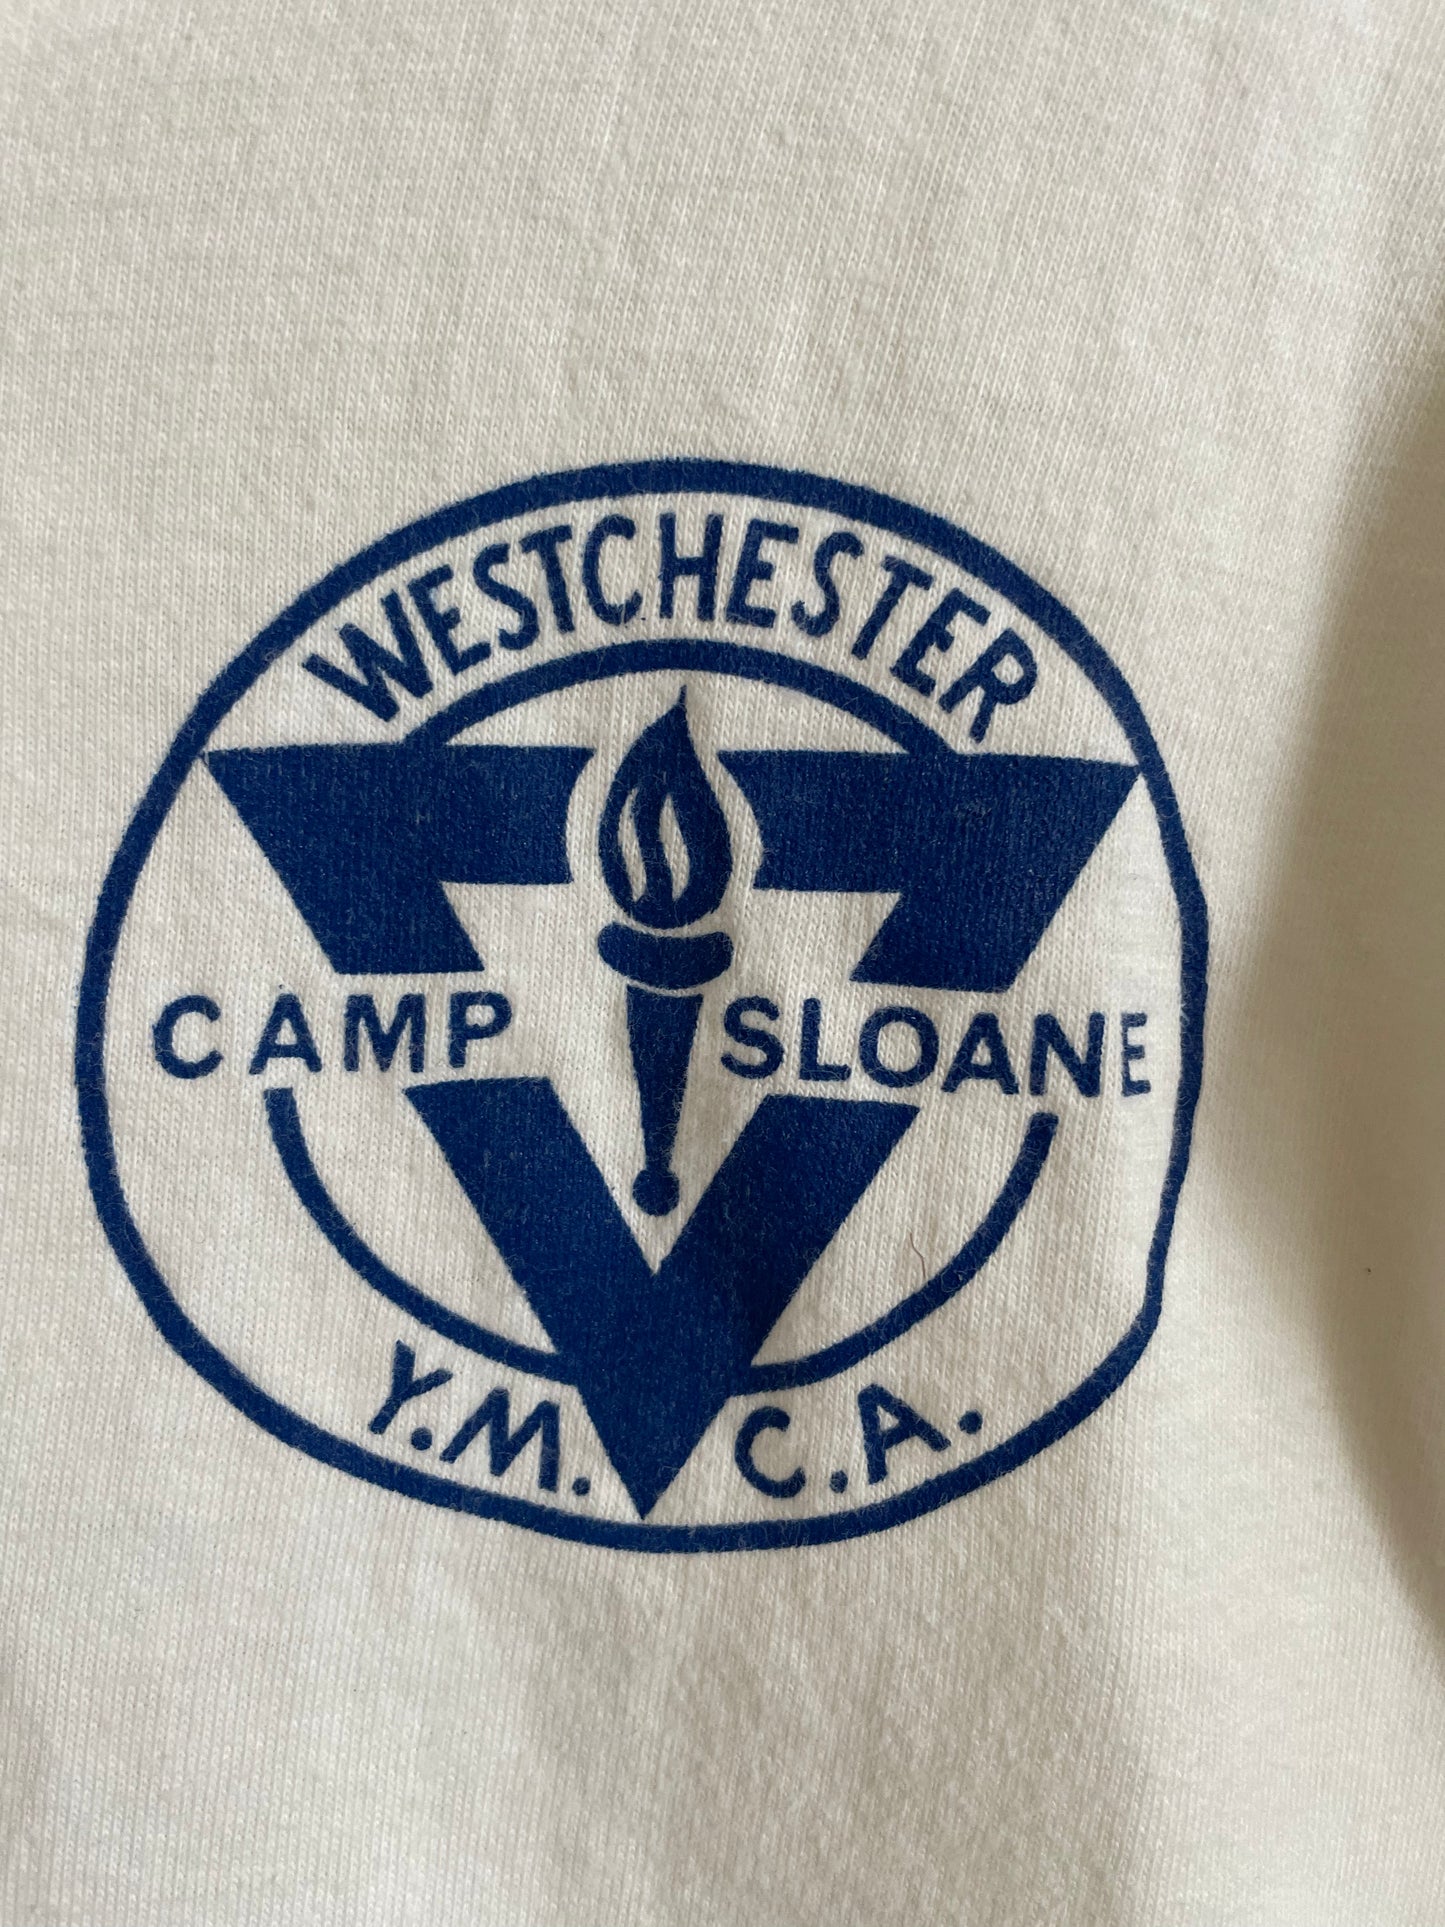 70s Westchester Camp Sloane YMCA Tee